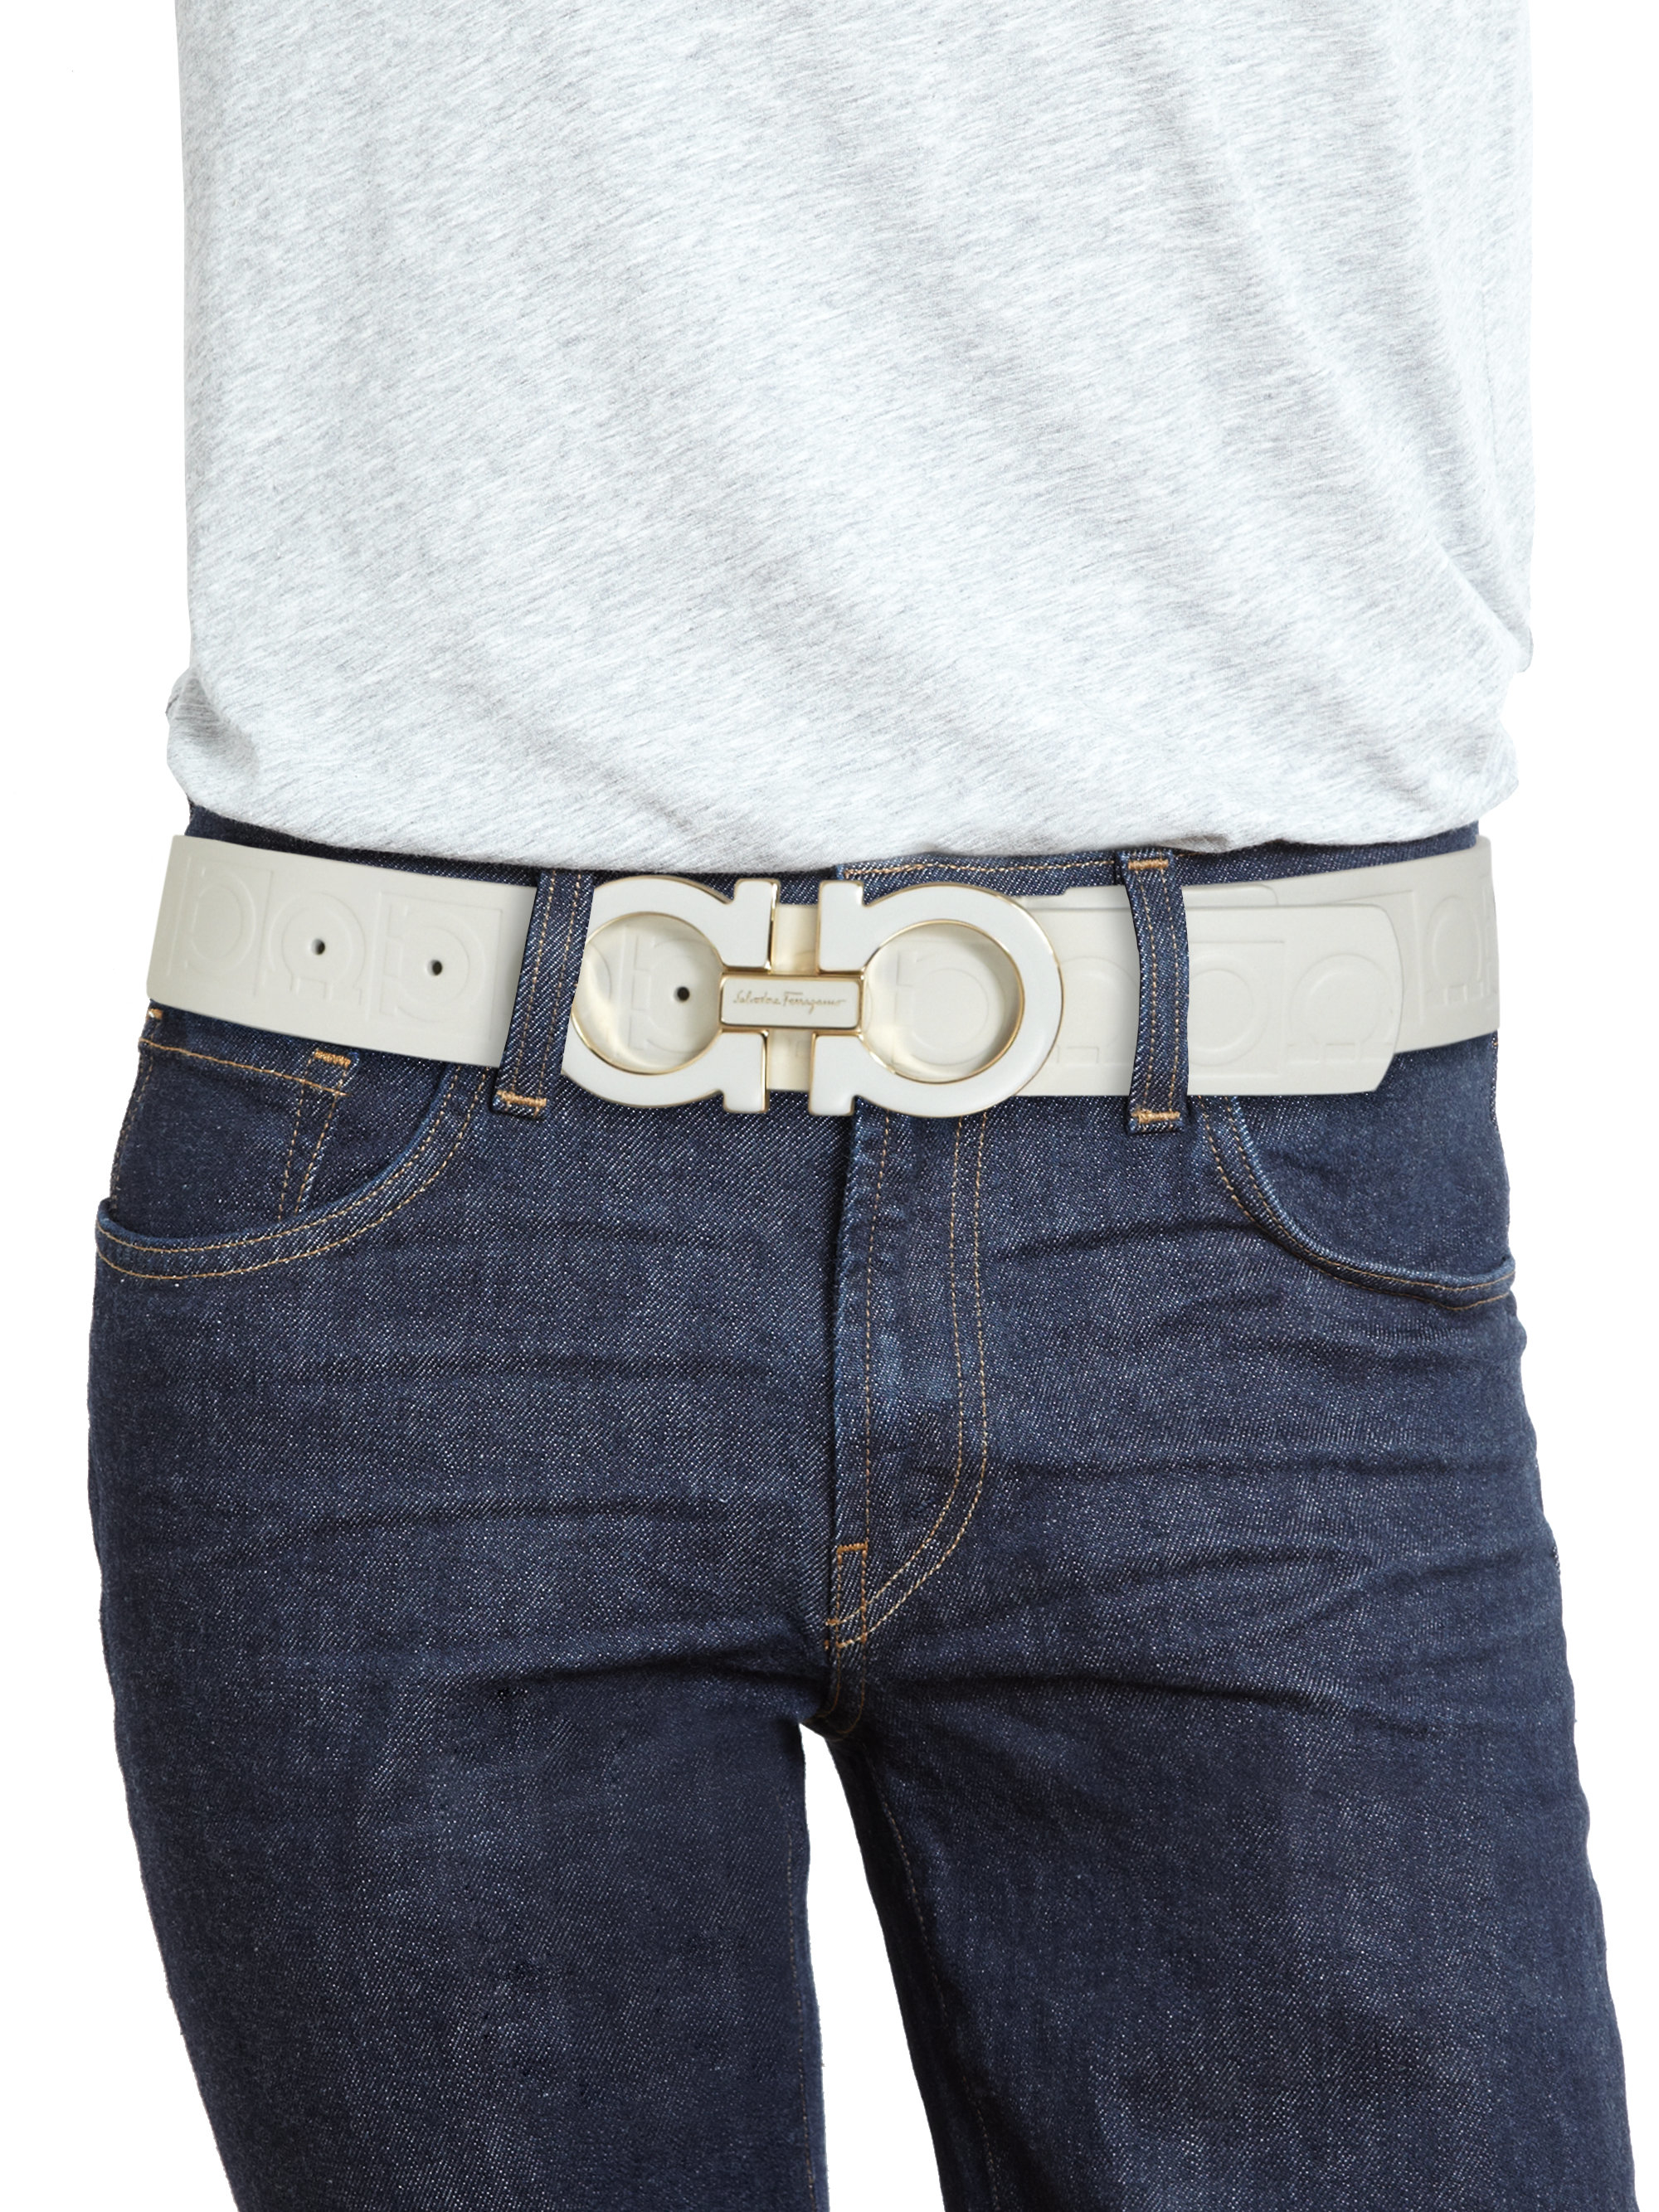 Ferragamo Gancini Leather Belt in White for Men